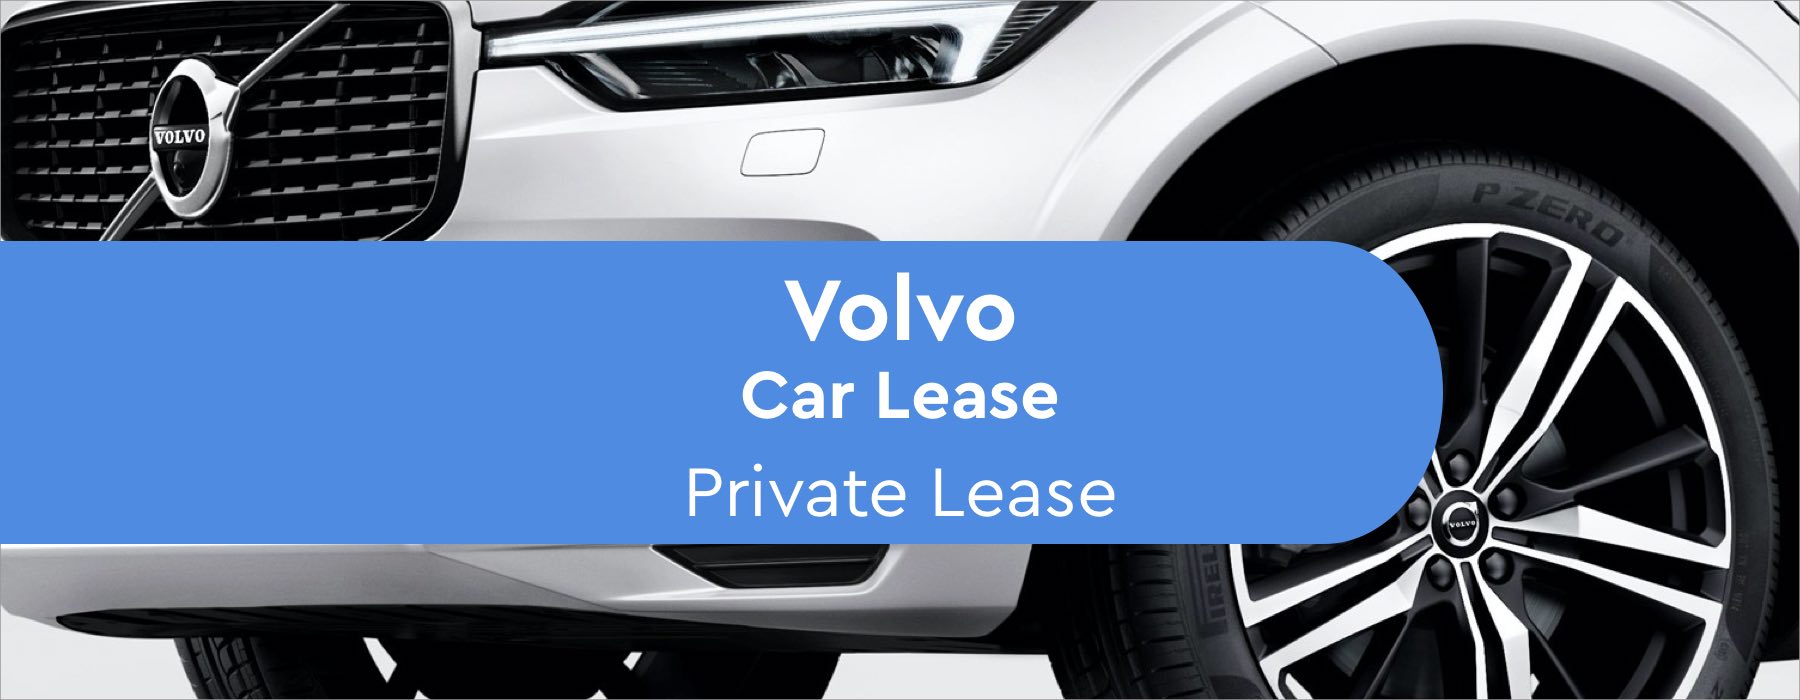 Volvo Car Lease Private Lease Vergelijking